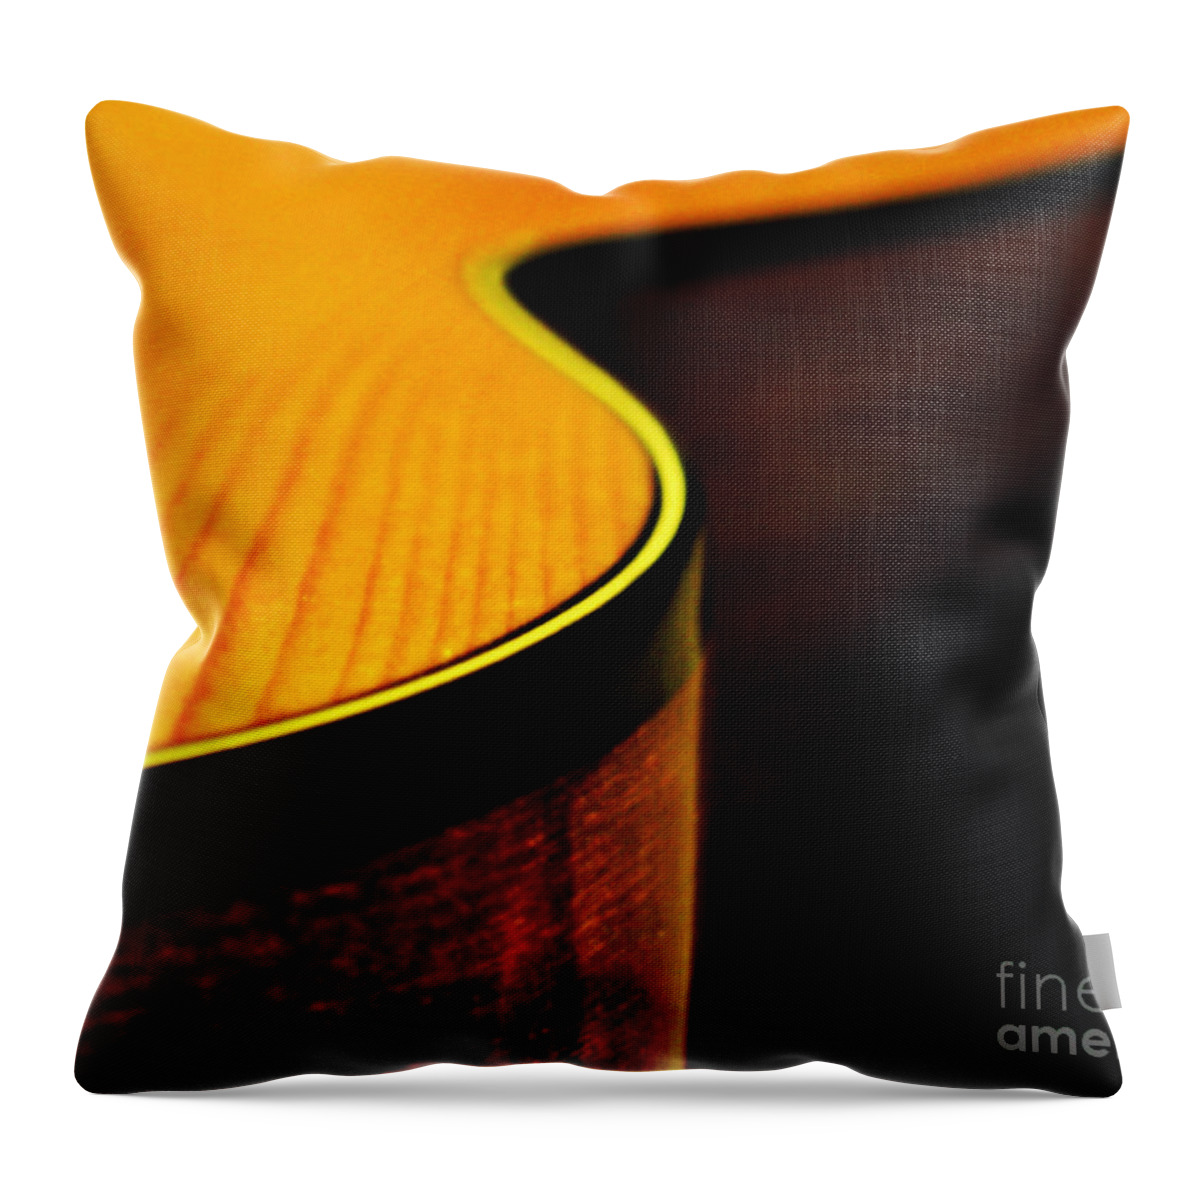 Abstract Throw Pillow featuring the photograph Golden Guitar Curve by Deborah Smith